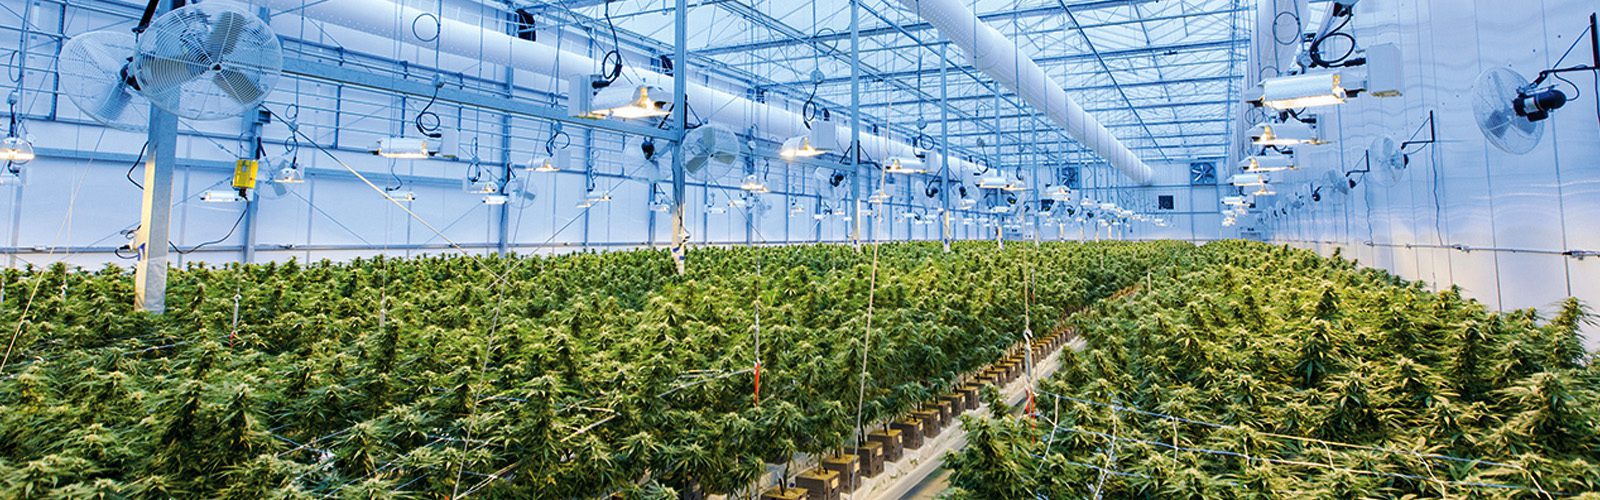 a marijuana greenhouse / grow room facility